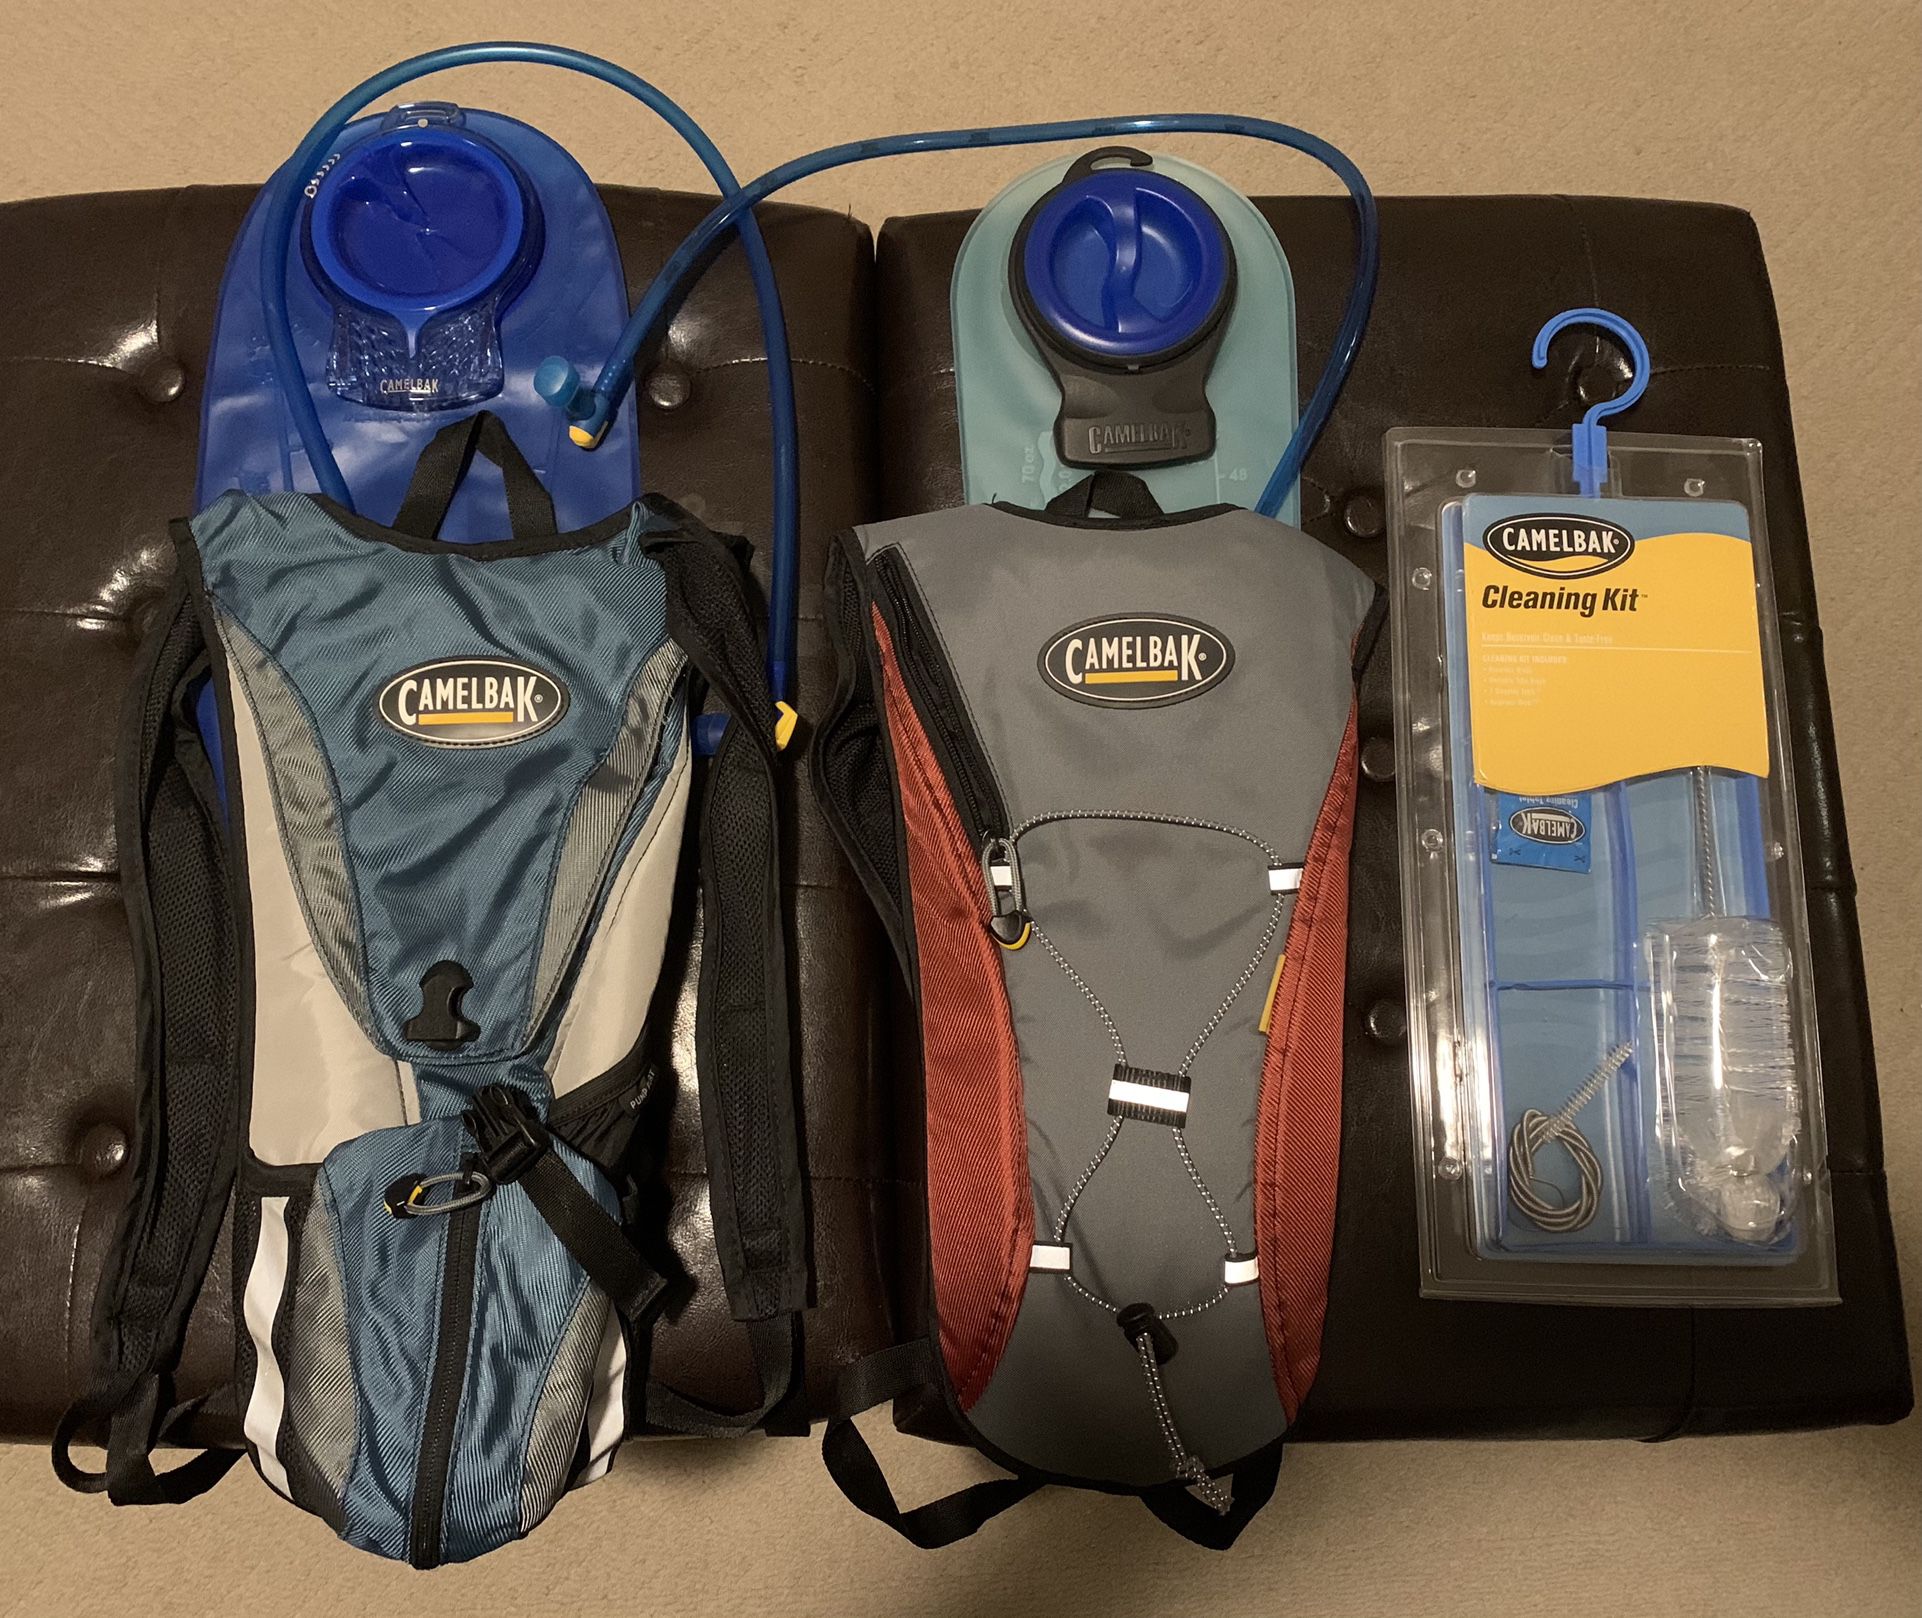 2 Camelbak Hydration Hiking/Biking Backpacks w/ Cleaning Kit